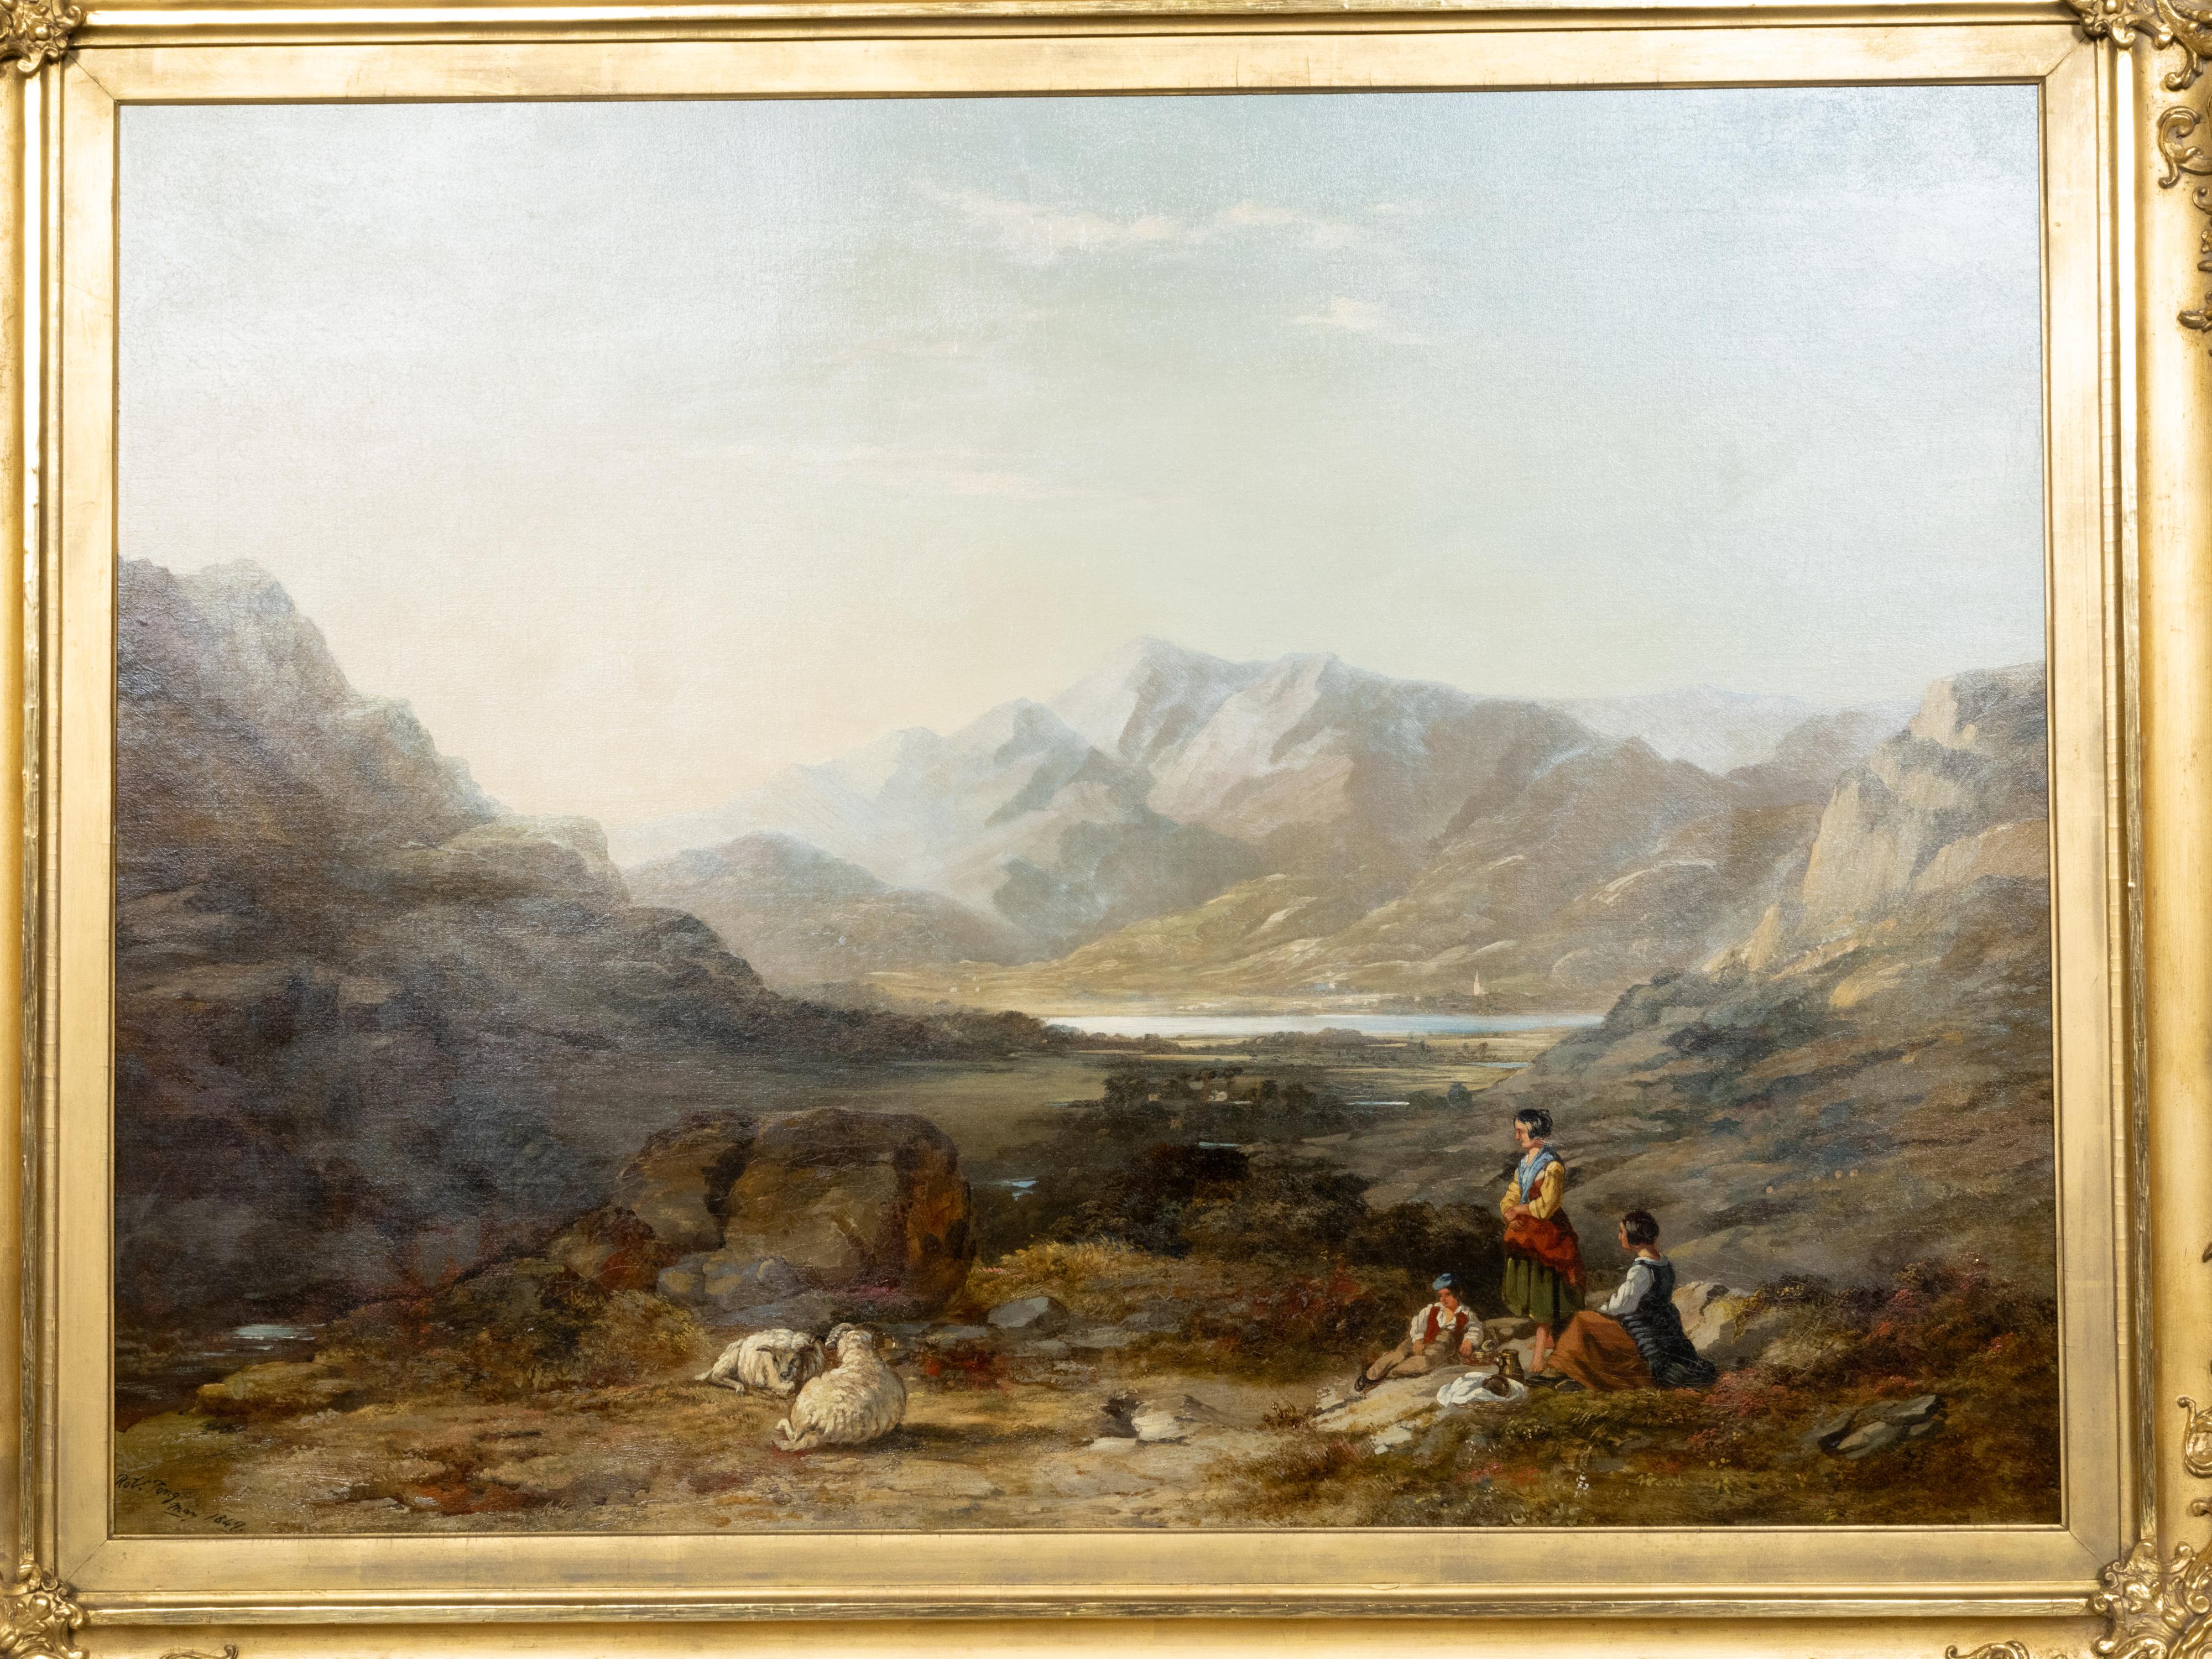 Signed Robert Tonge 1847 Oil on Canvas Pastoral Landscape Painting in Gilt Frame For Sale 3